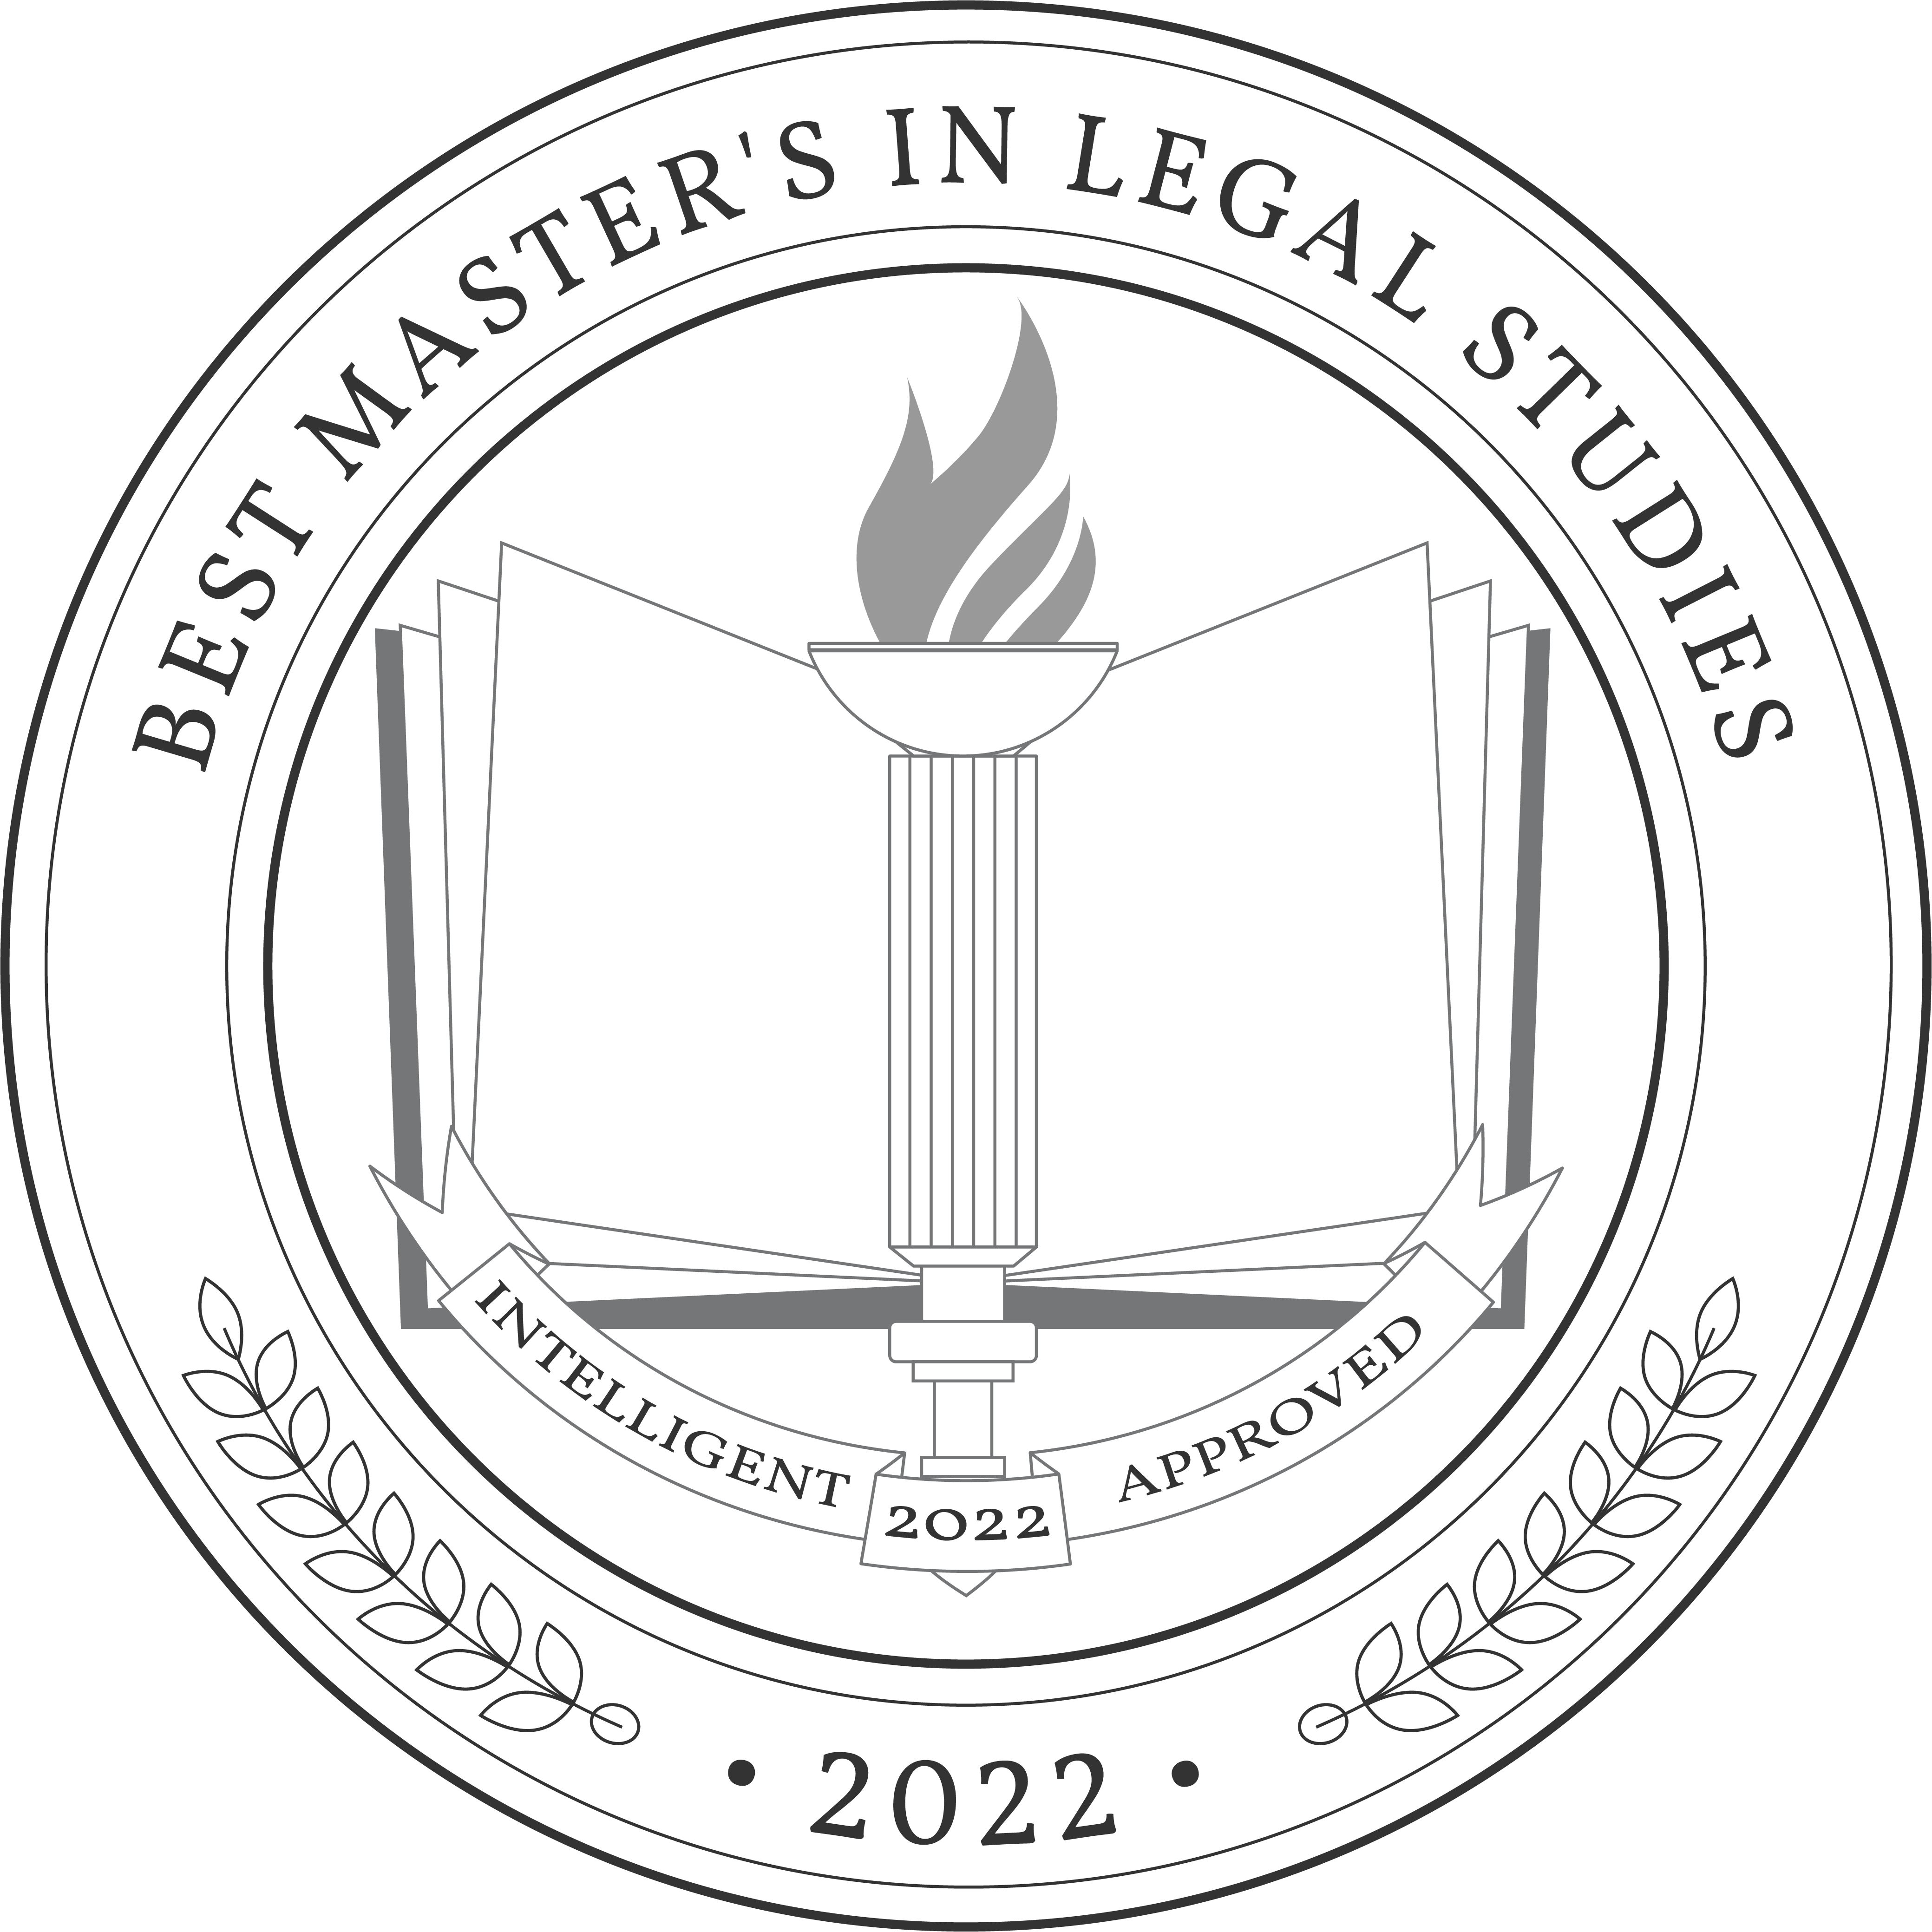 Best Master's in Legal Studies Badge